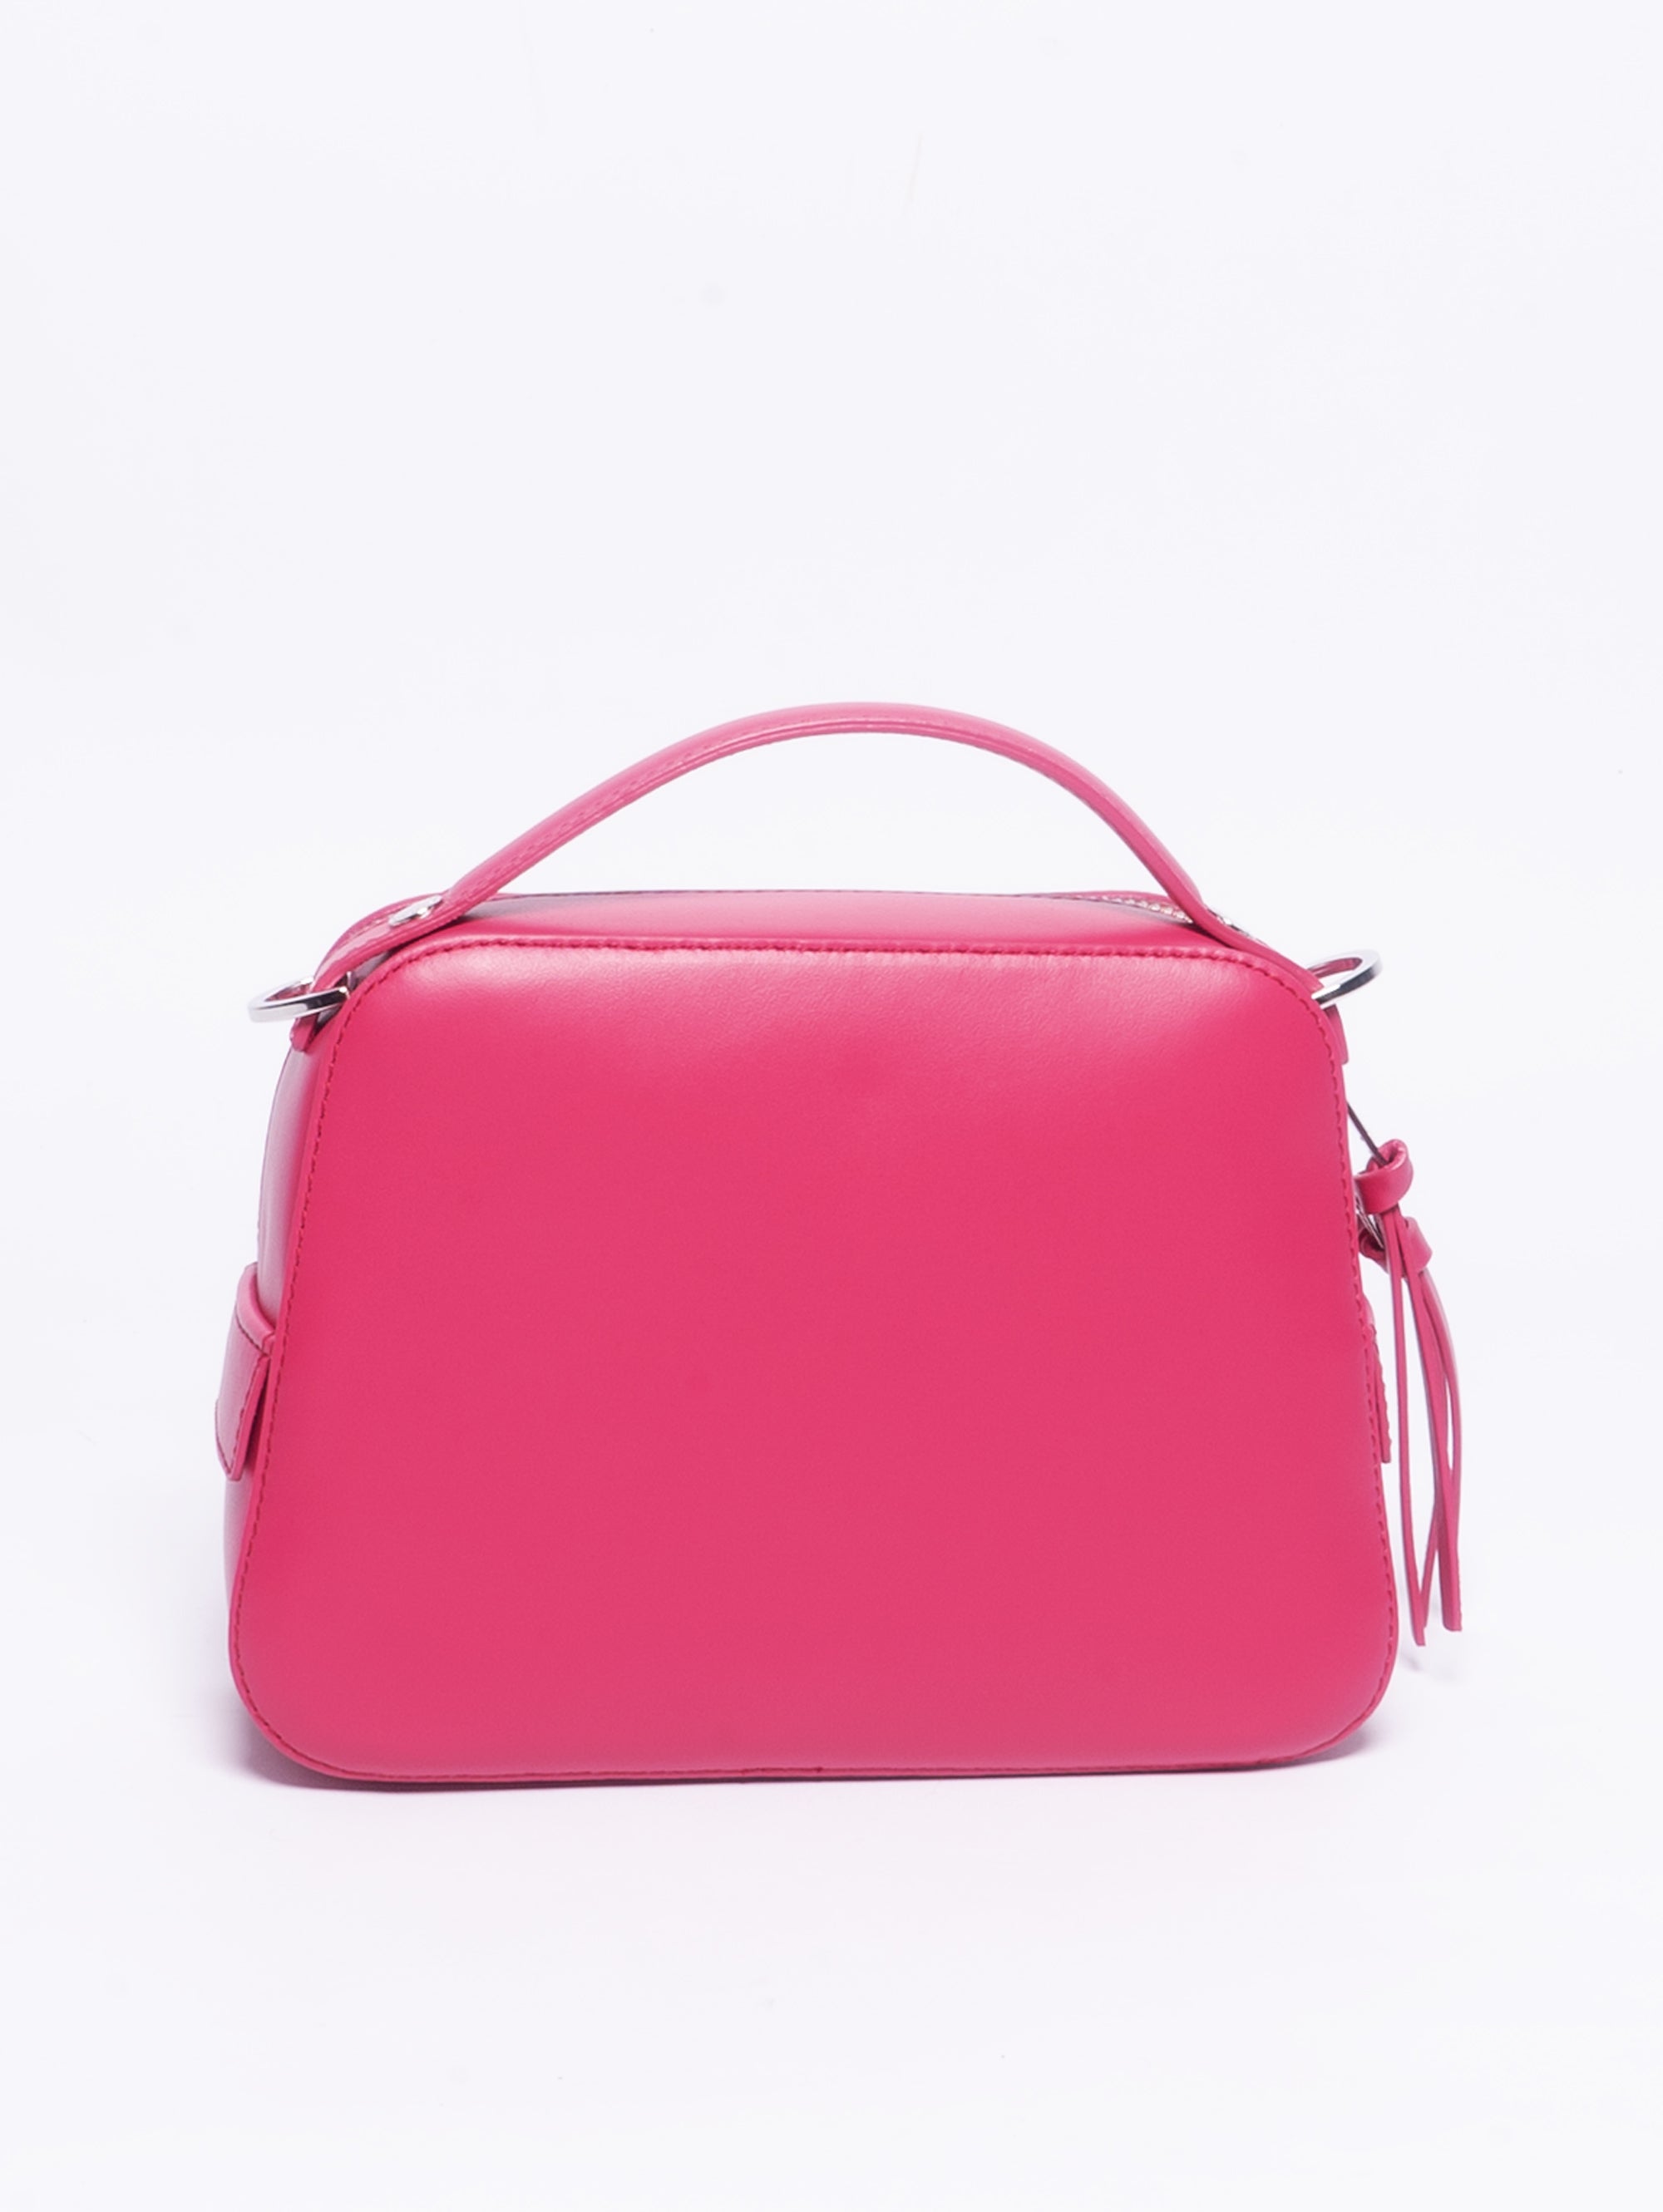 Chéri Handbag in Raspberry Smooth Leather